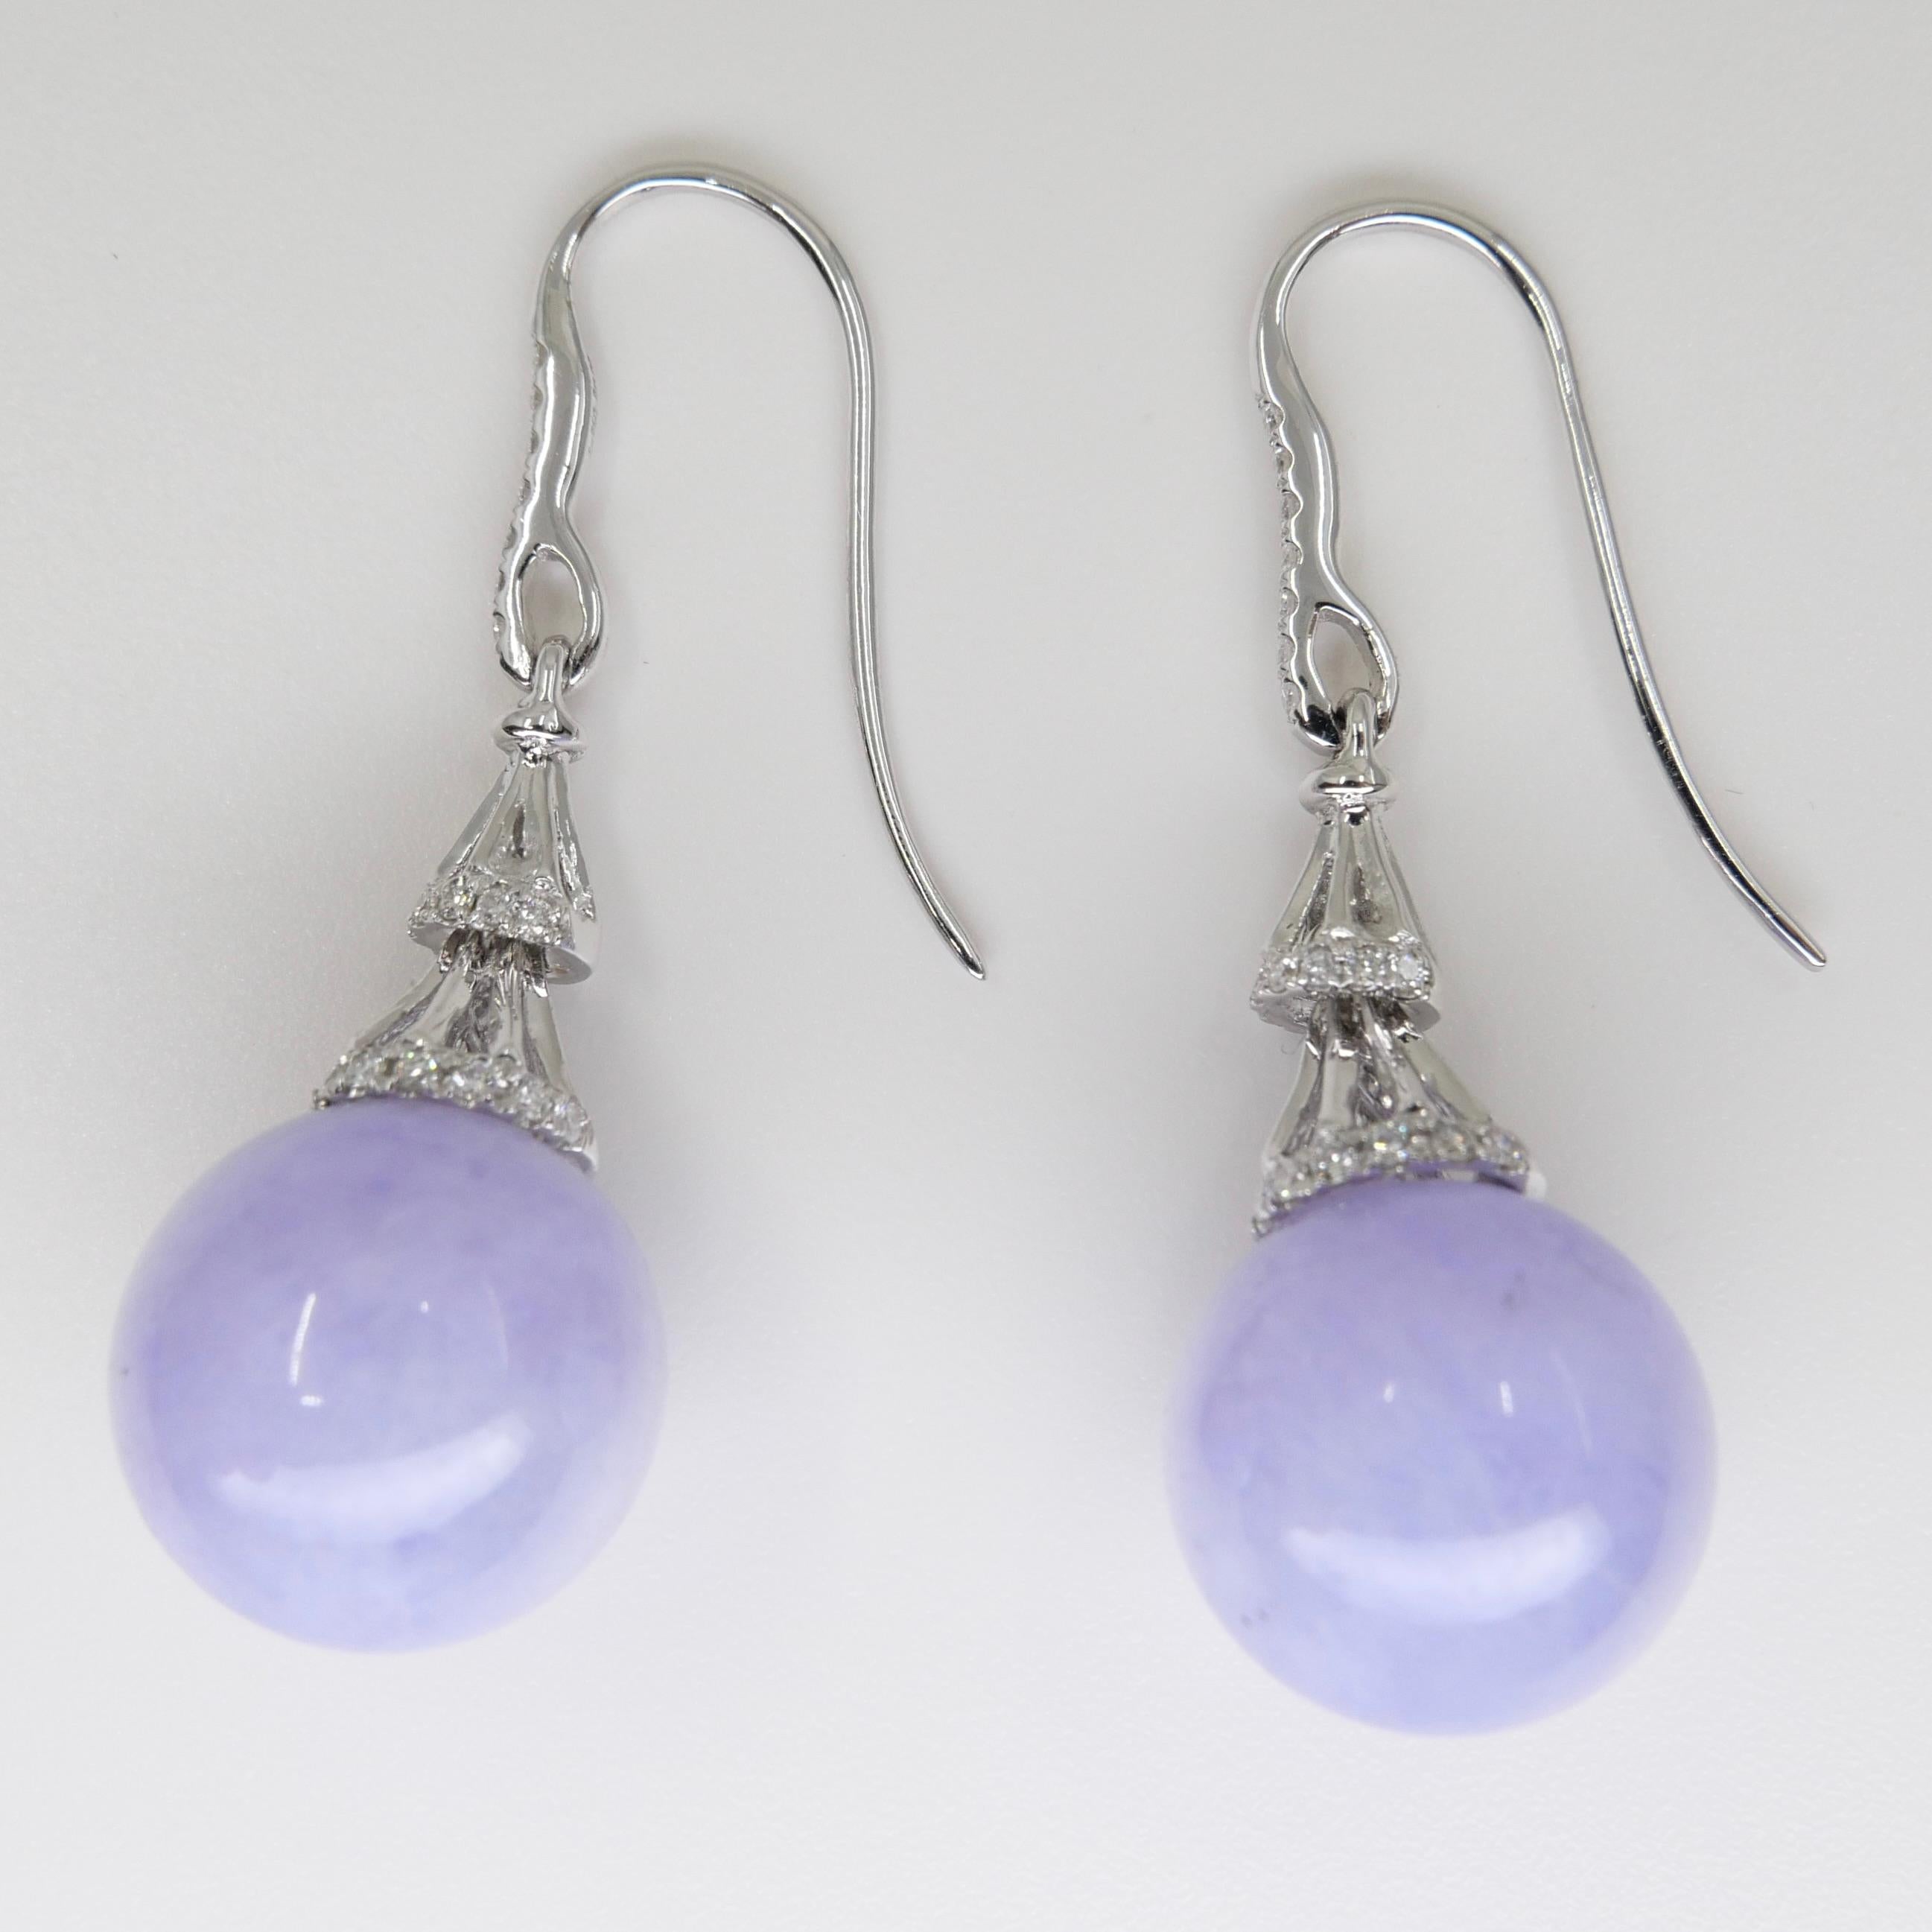 Certified Natural Lavender Jade Beads & Diamond Drop Earrings. Exquisite. 10